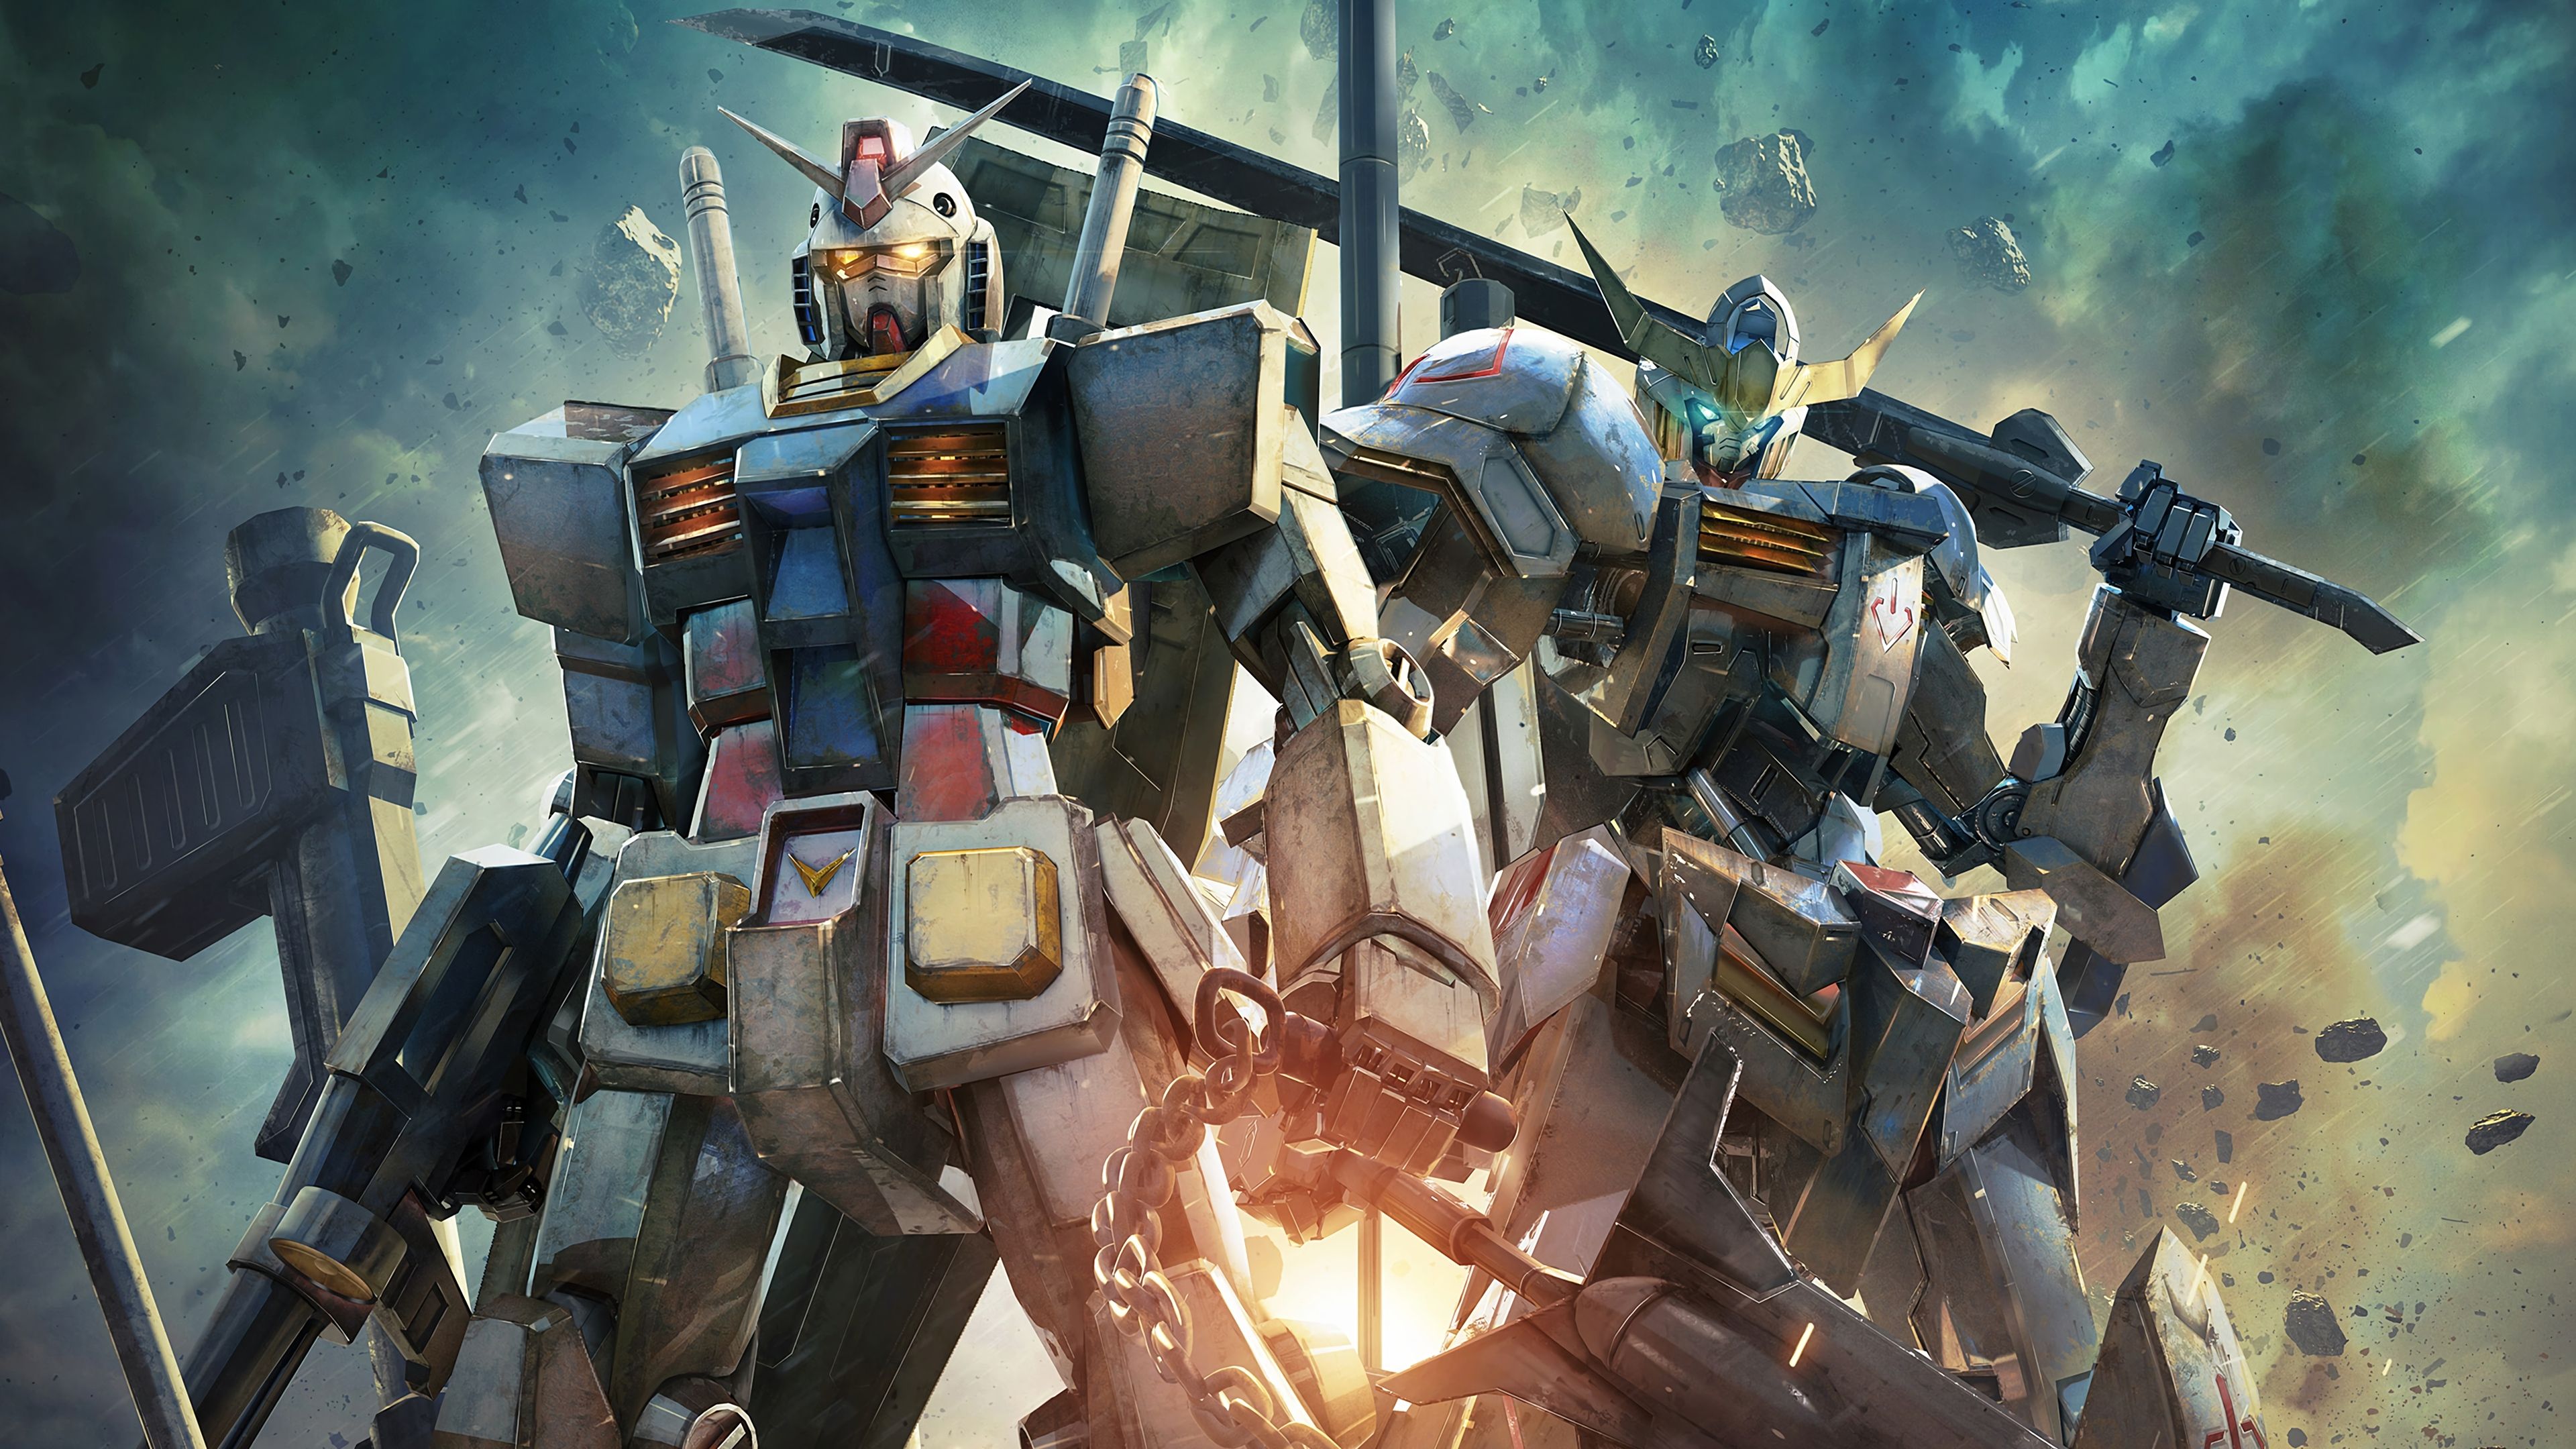 Gundam wallpaper, Anime wallpaper, Gundam.com